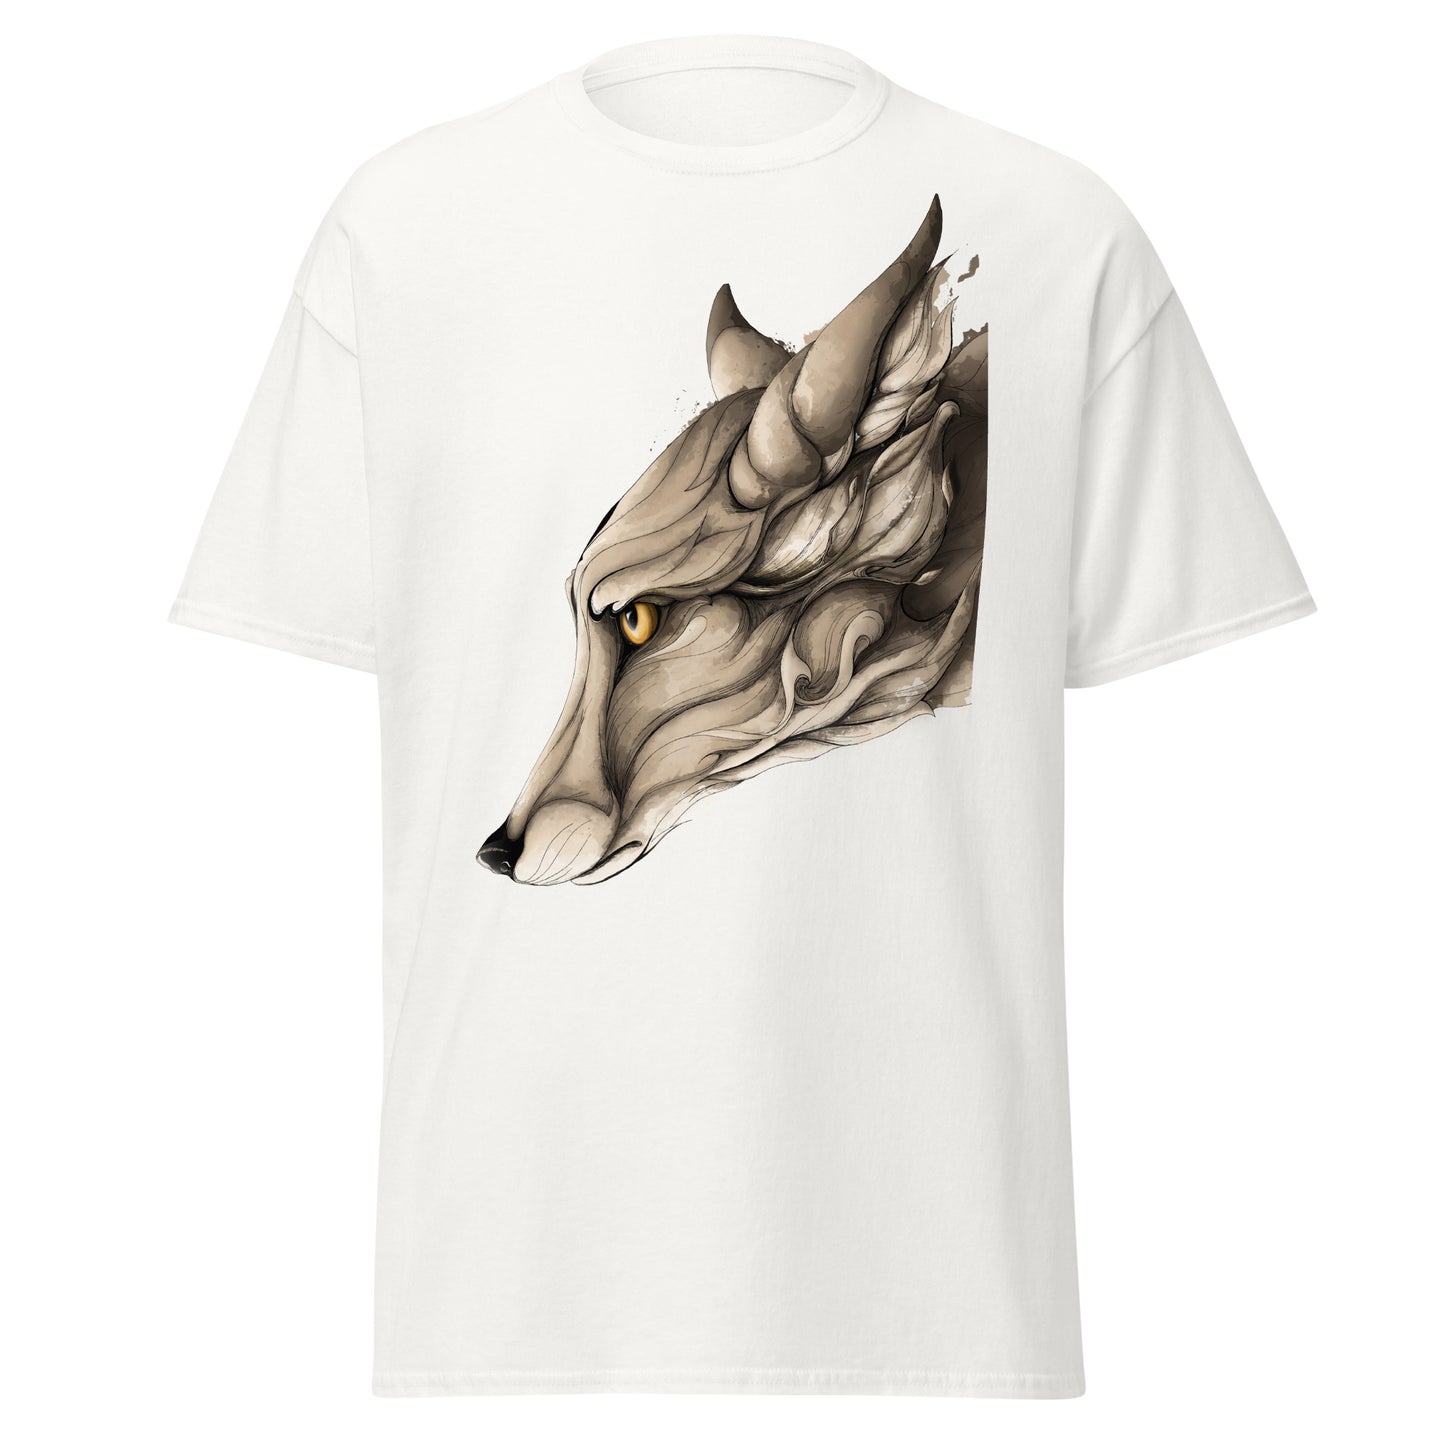 The Wood Fox T-shirt